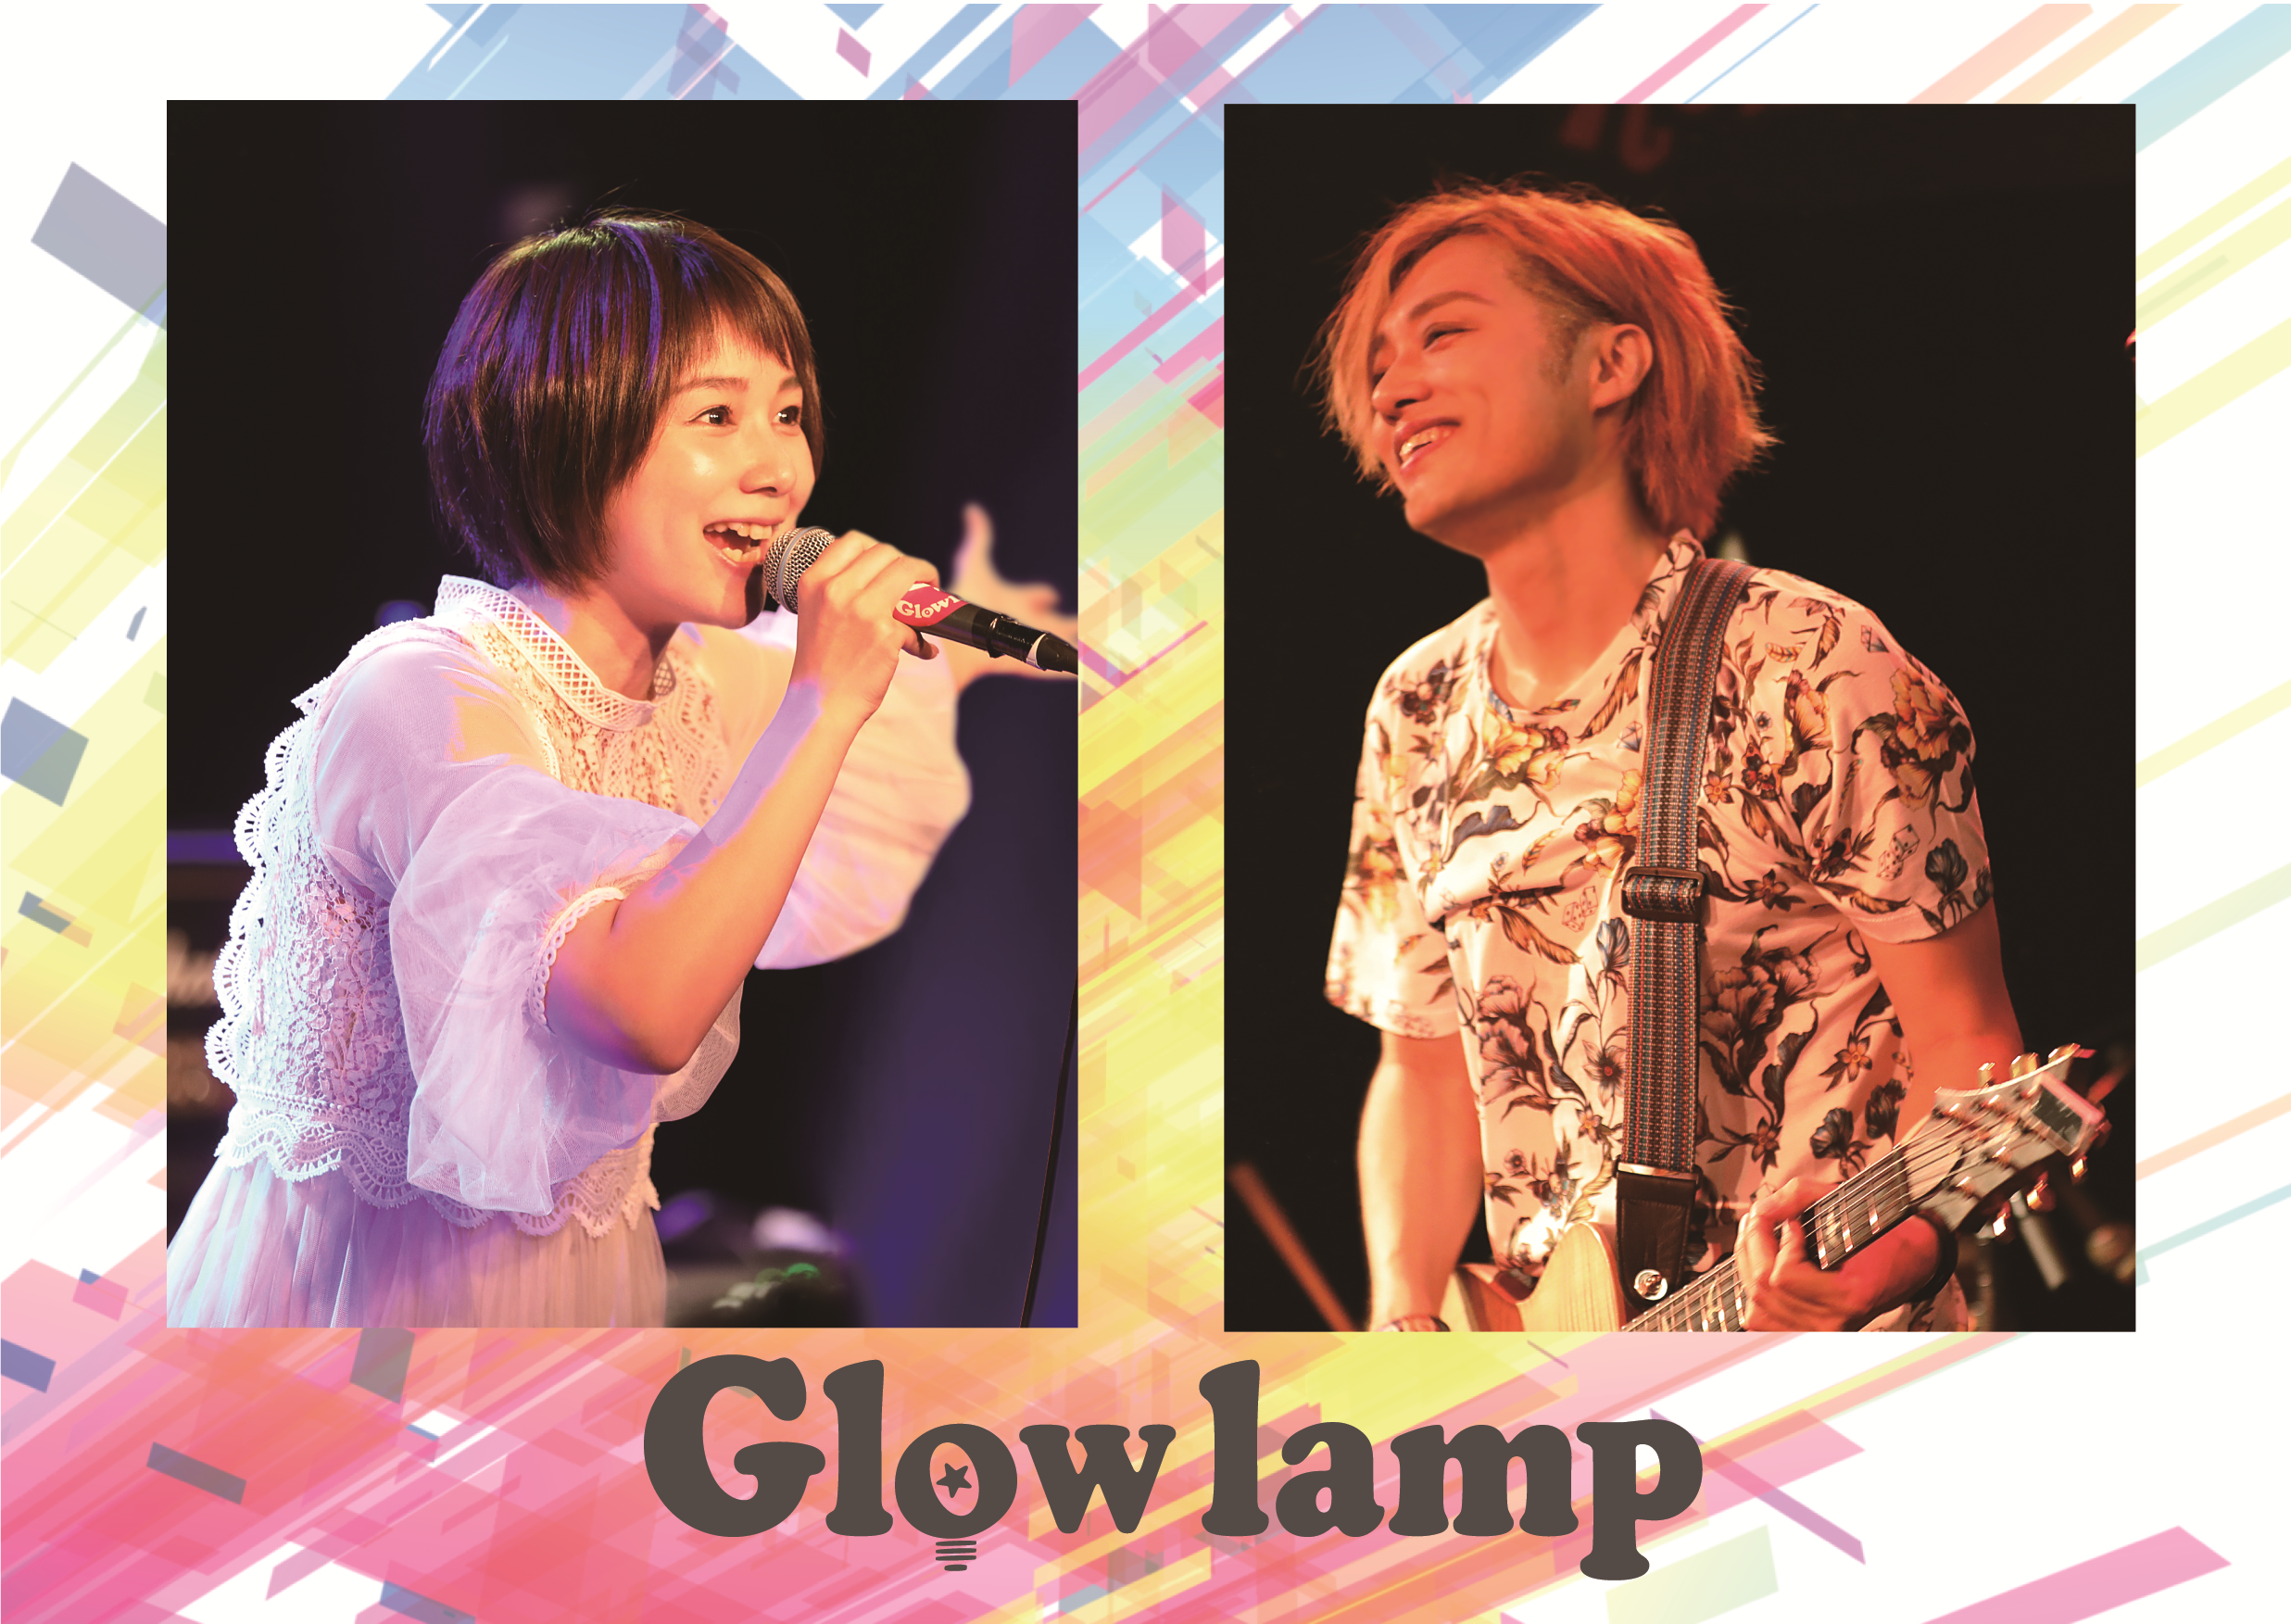 Glowlamp